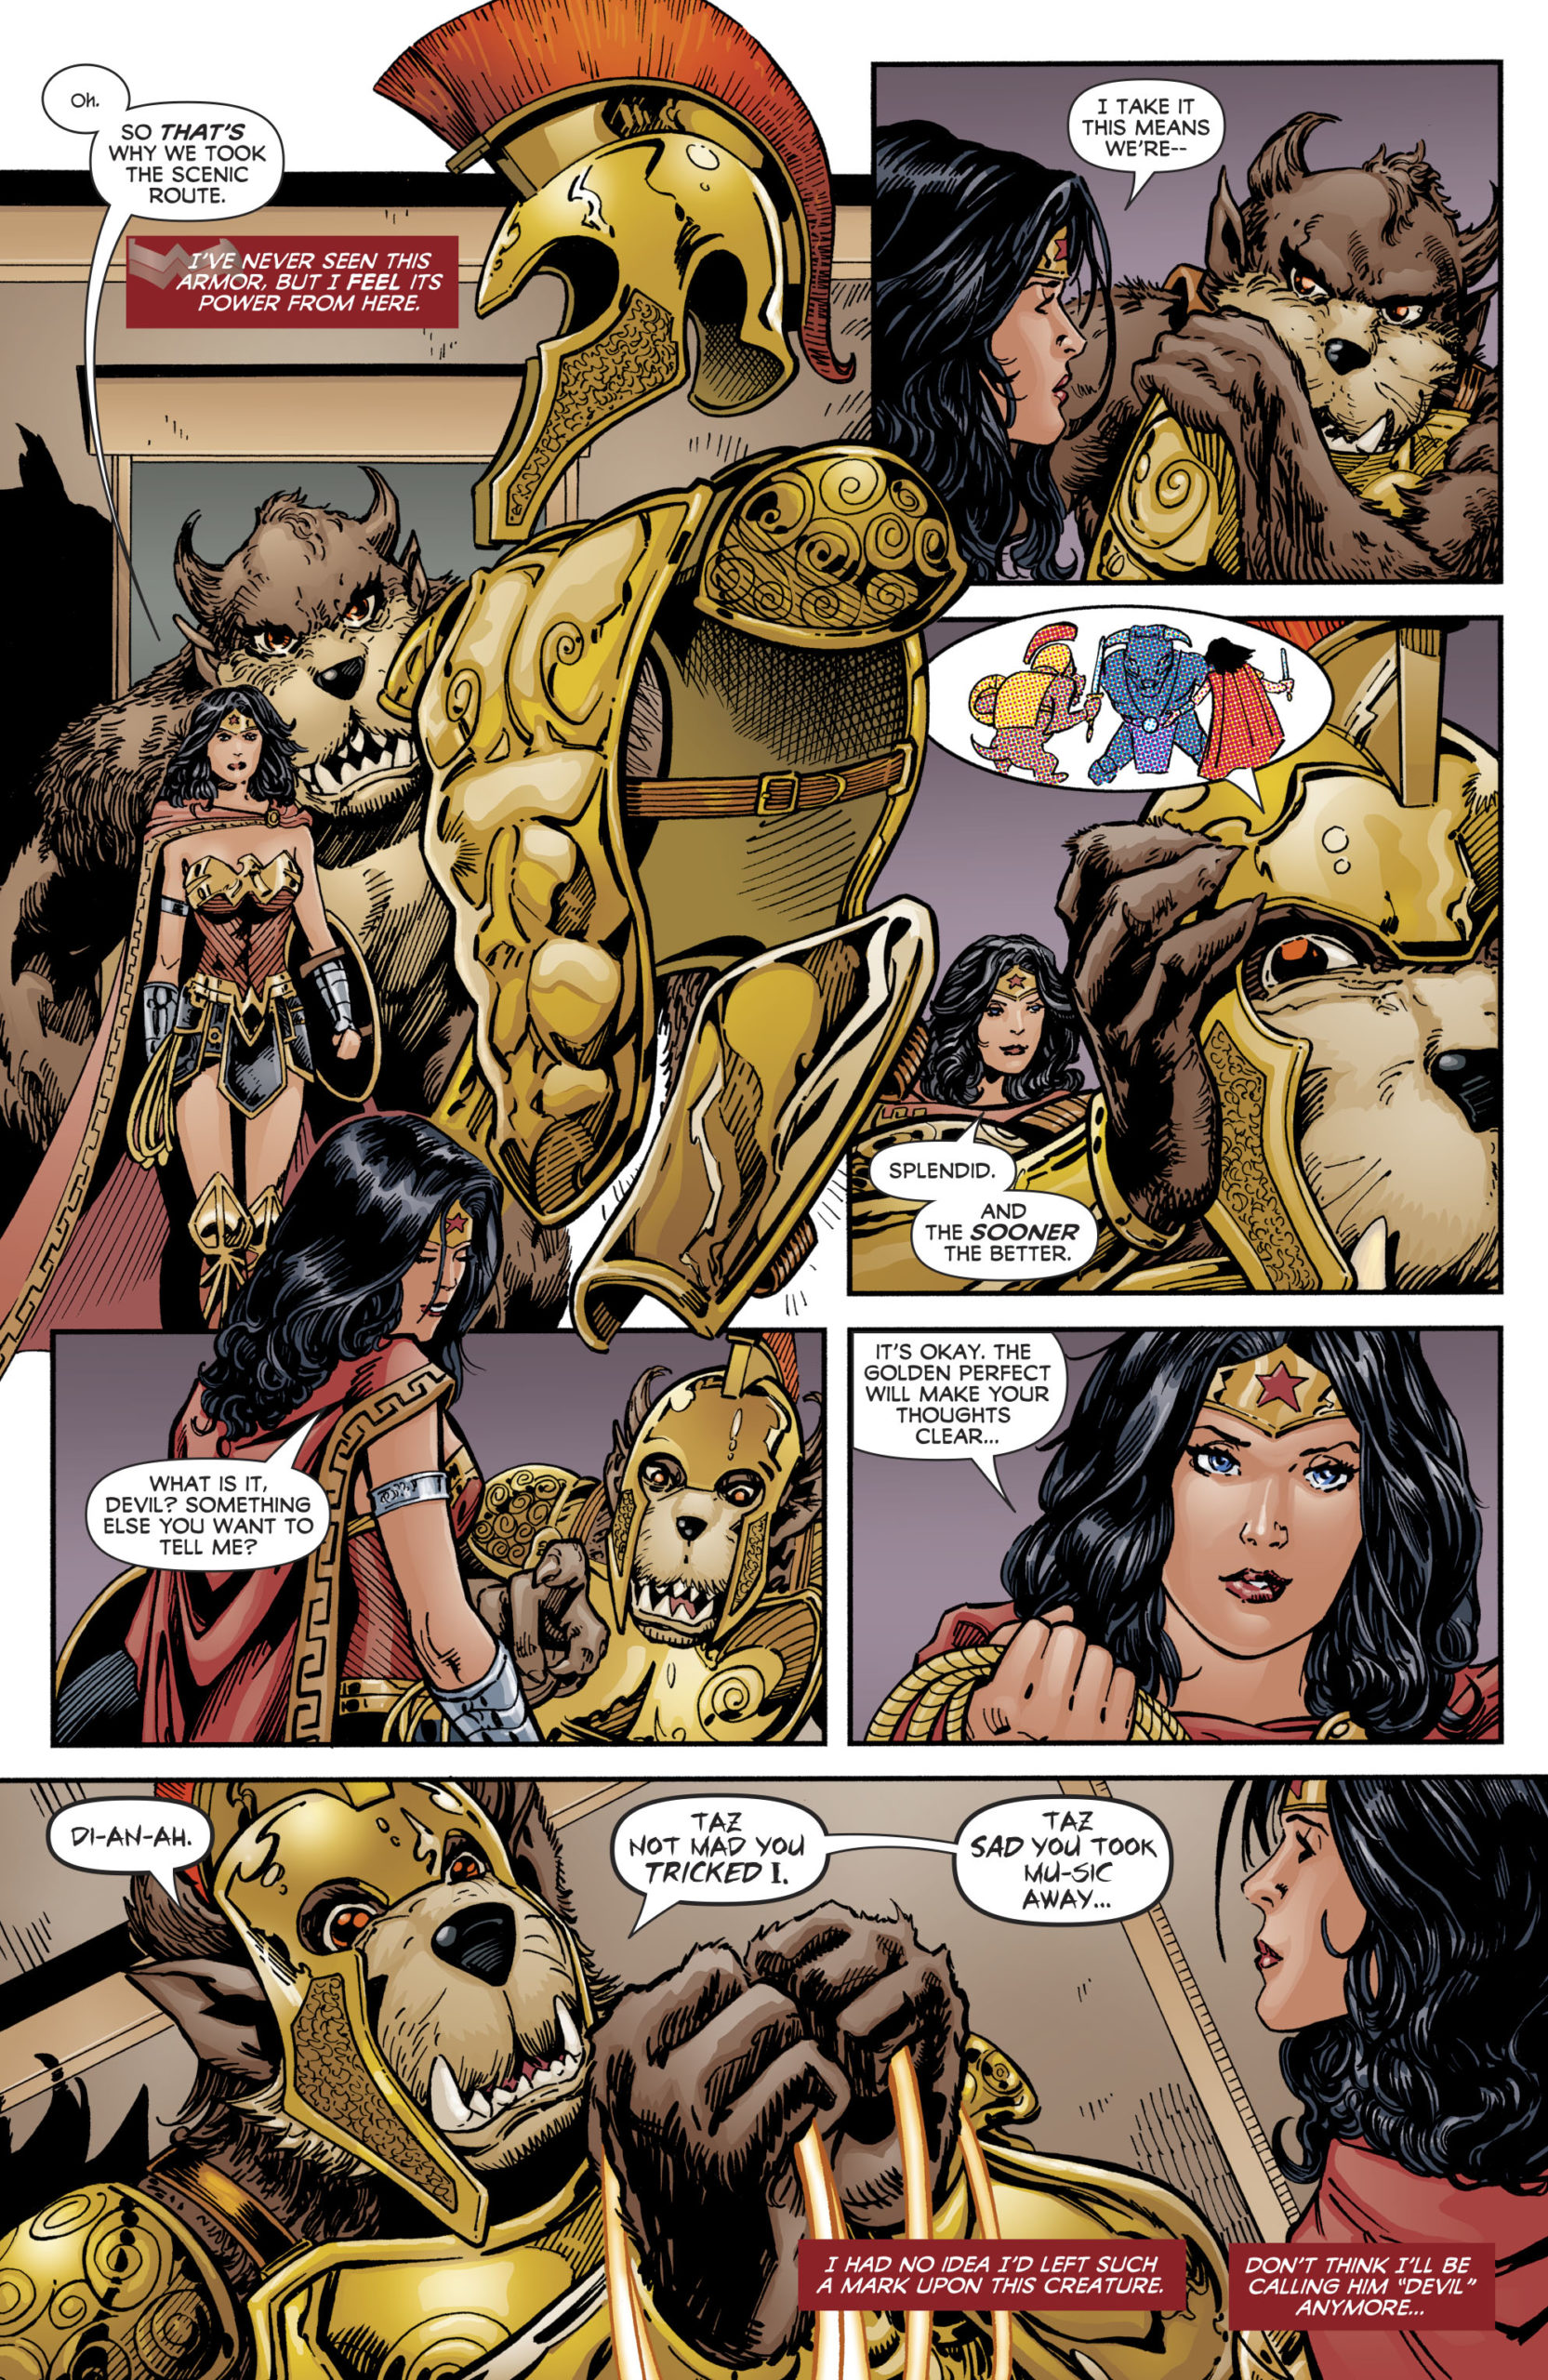 Wonder Woman And The Tasmanian Devil Make For An Epic Greek Myth